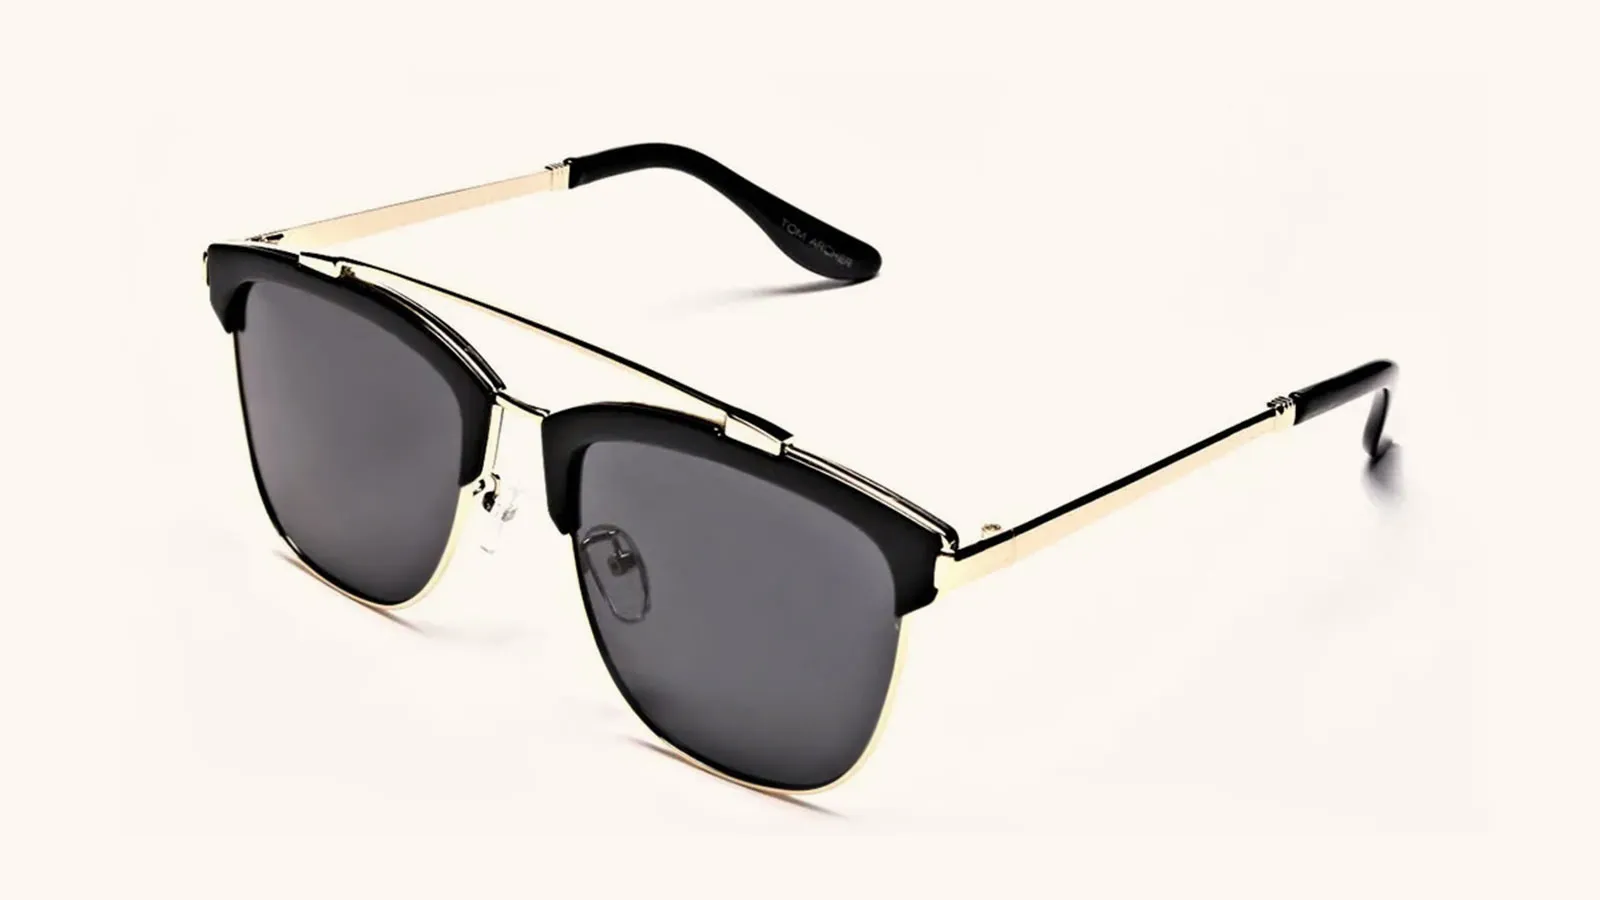 Browline aviator sunglasses for travel